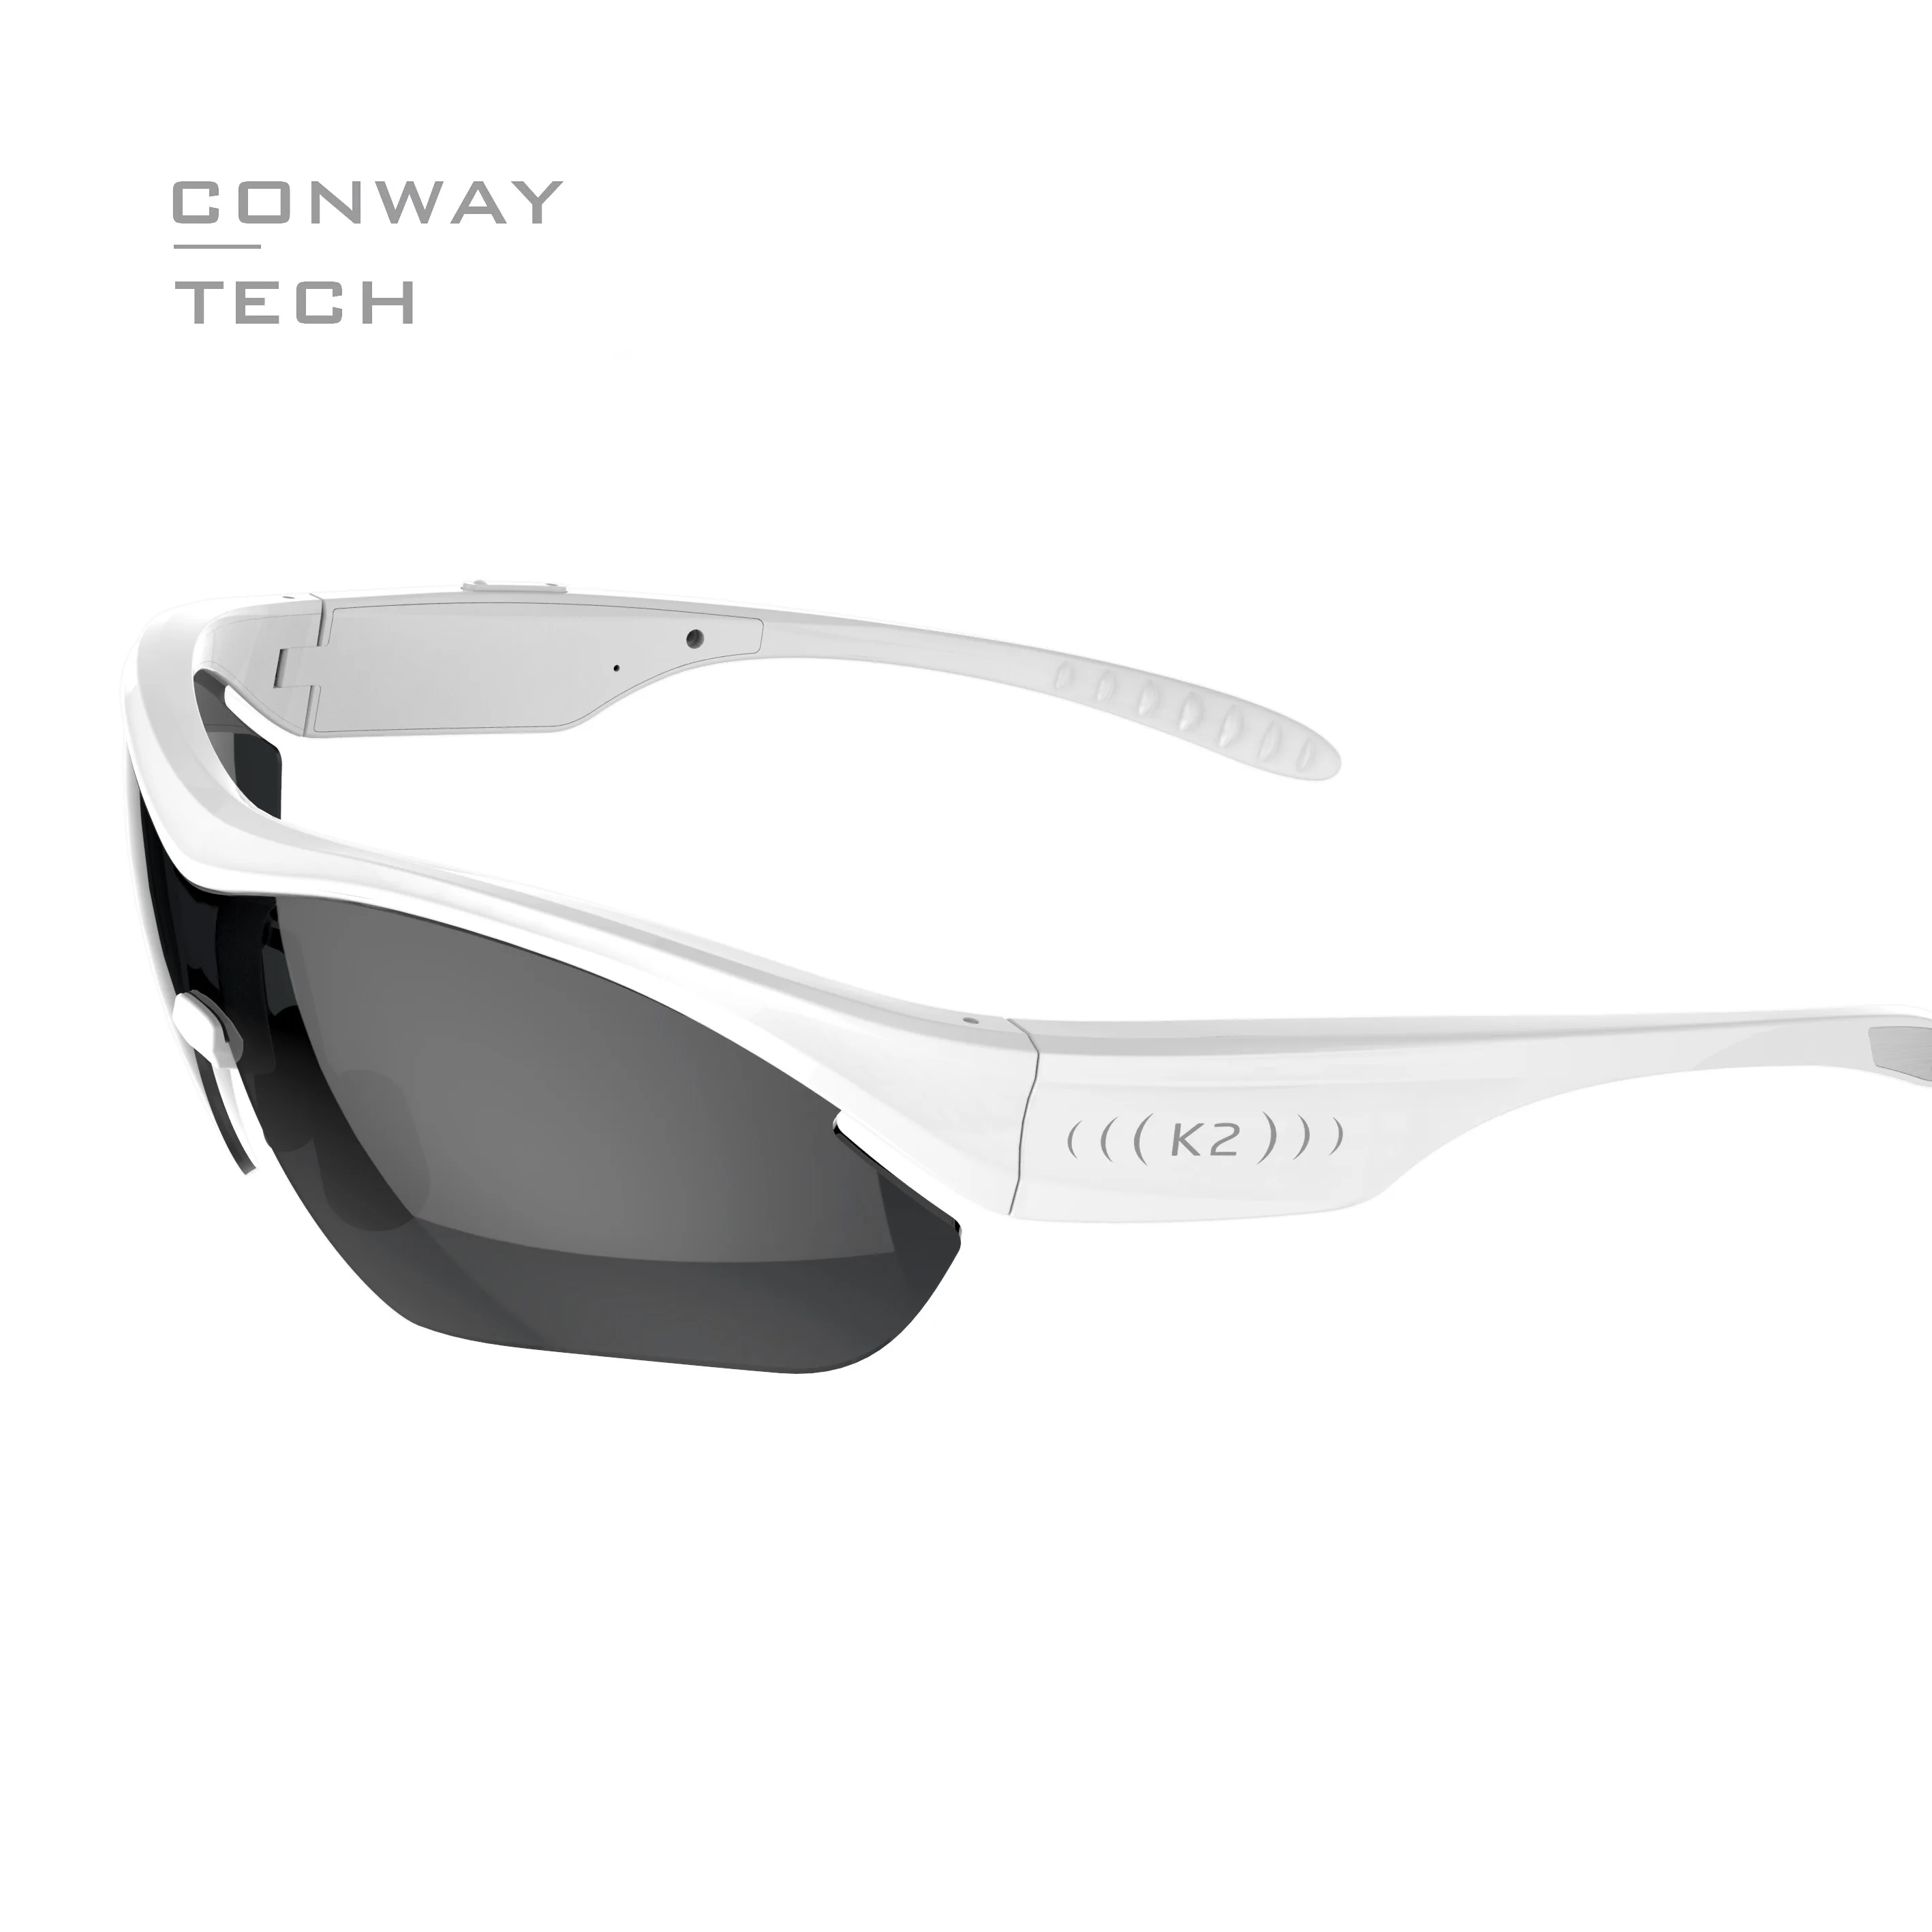 

SMART SUNGLASSES K2 sunglasses 2020 Polarized Glasses Outdoor Earphone Micro USB Hands-free Listen to music